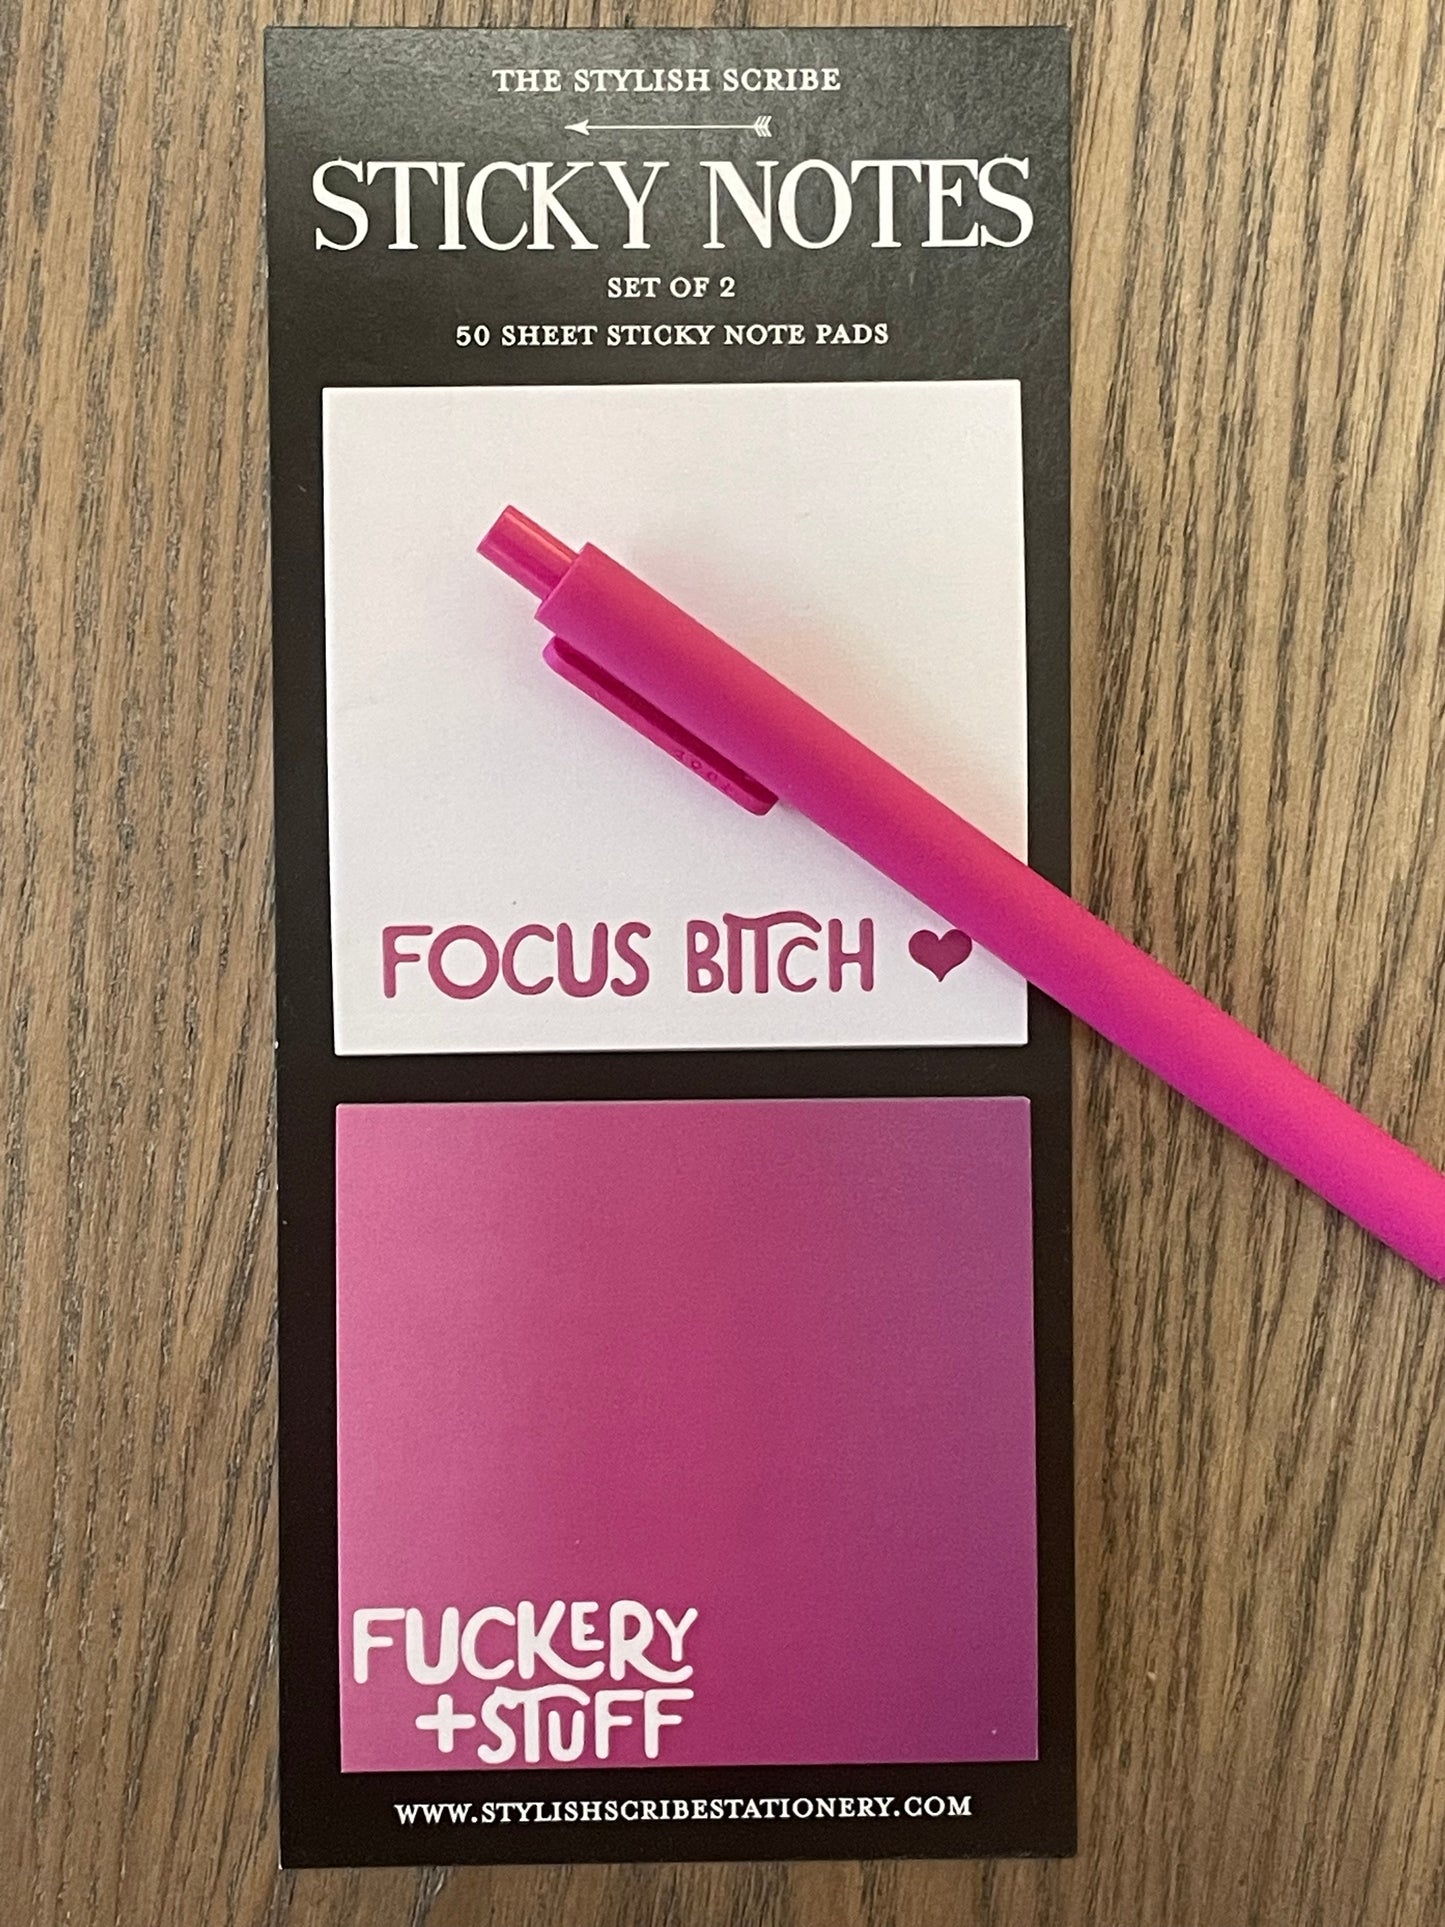 Focus B*itch Sticky Note set